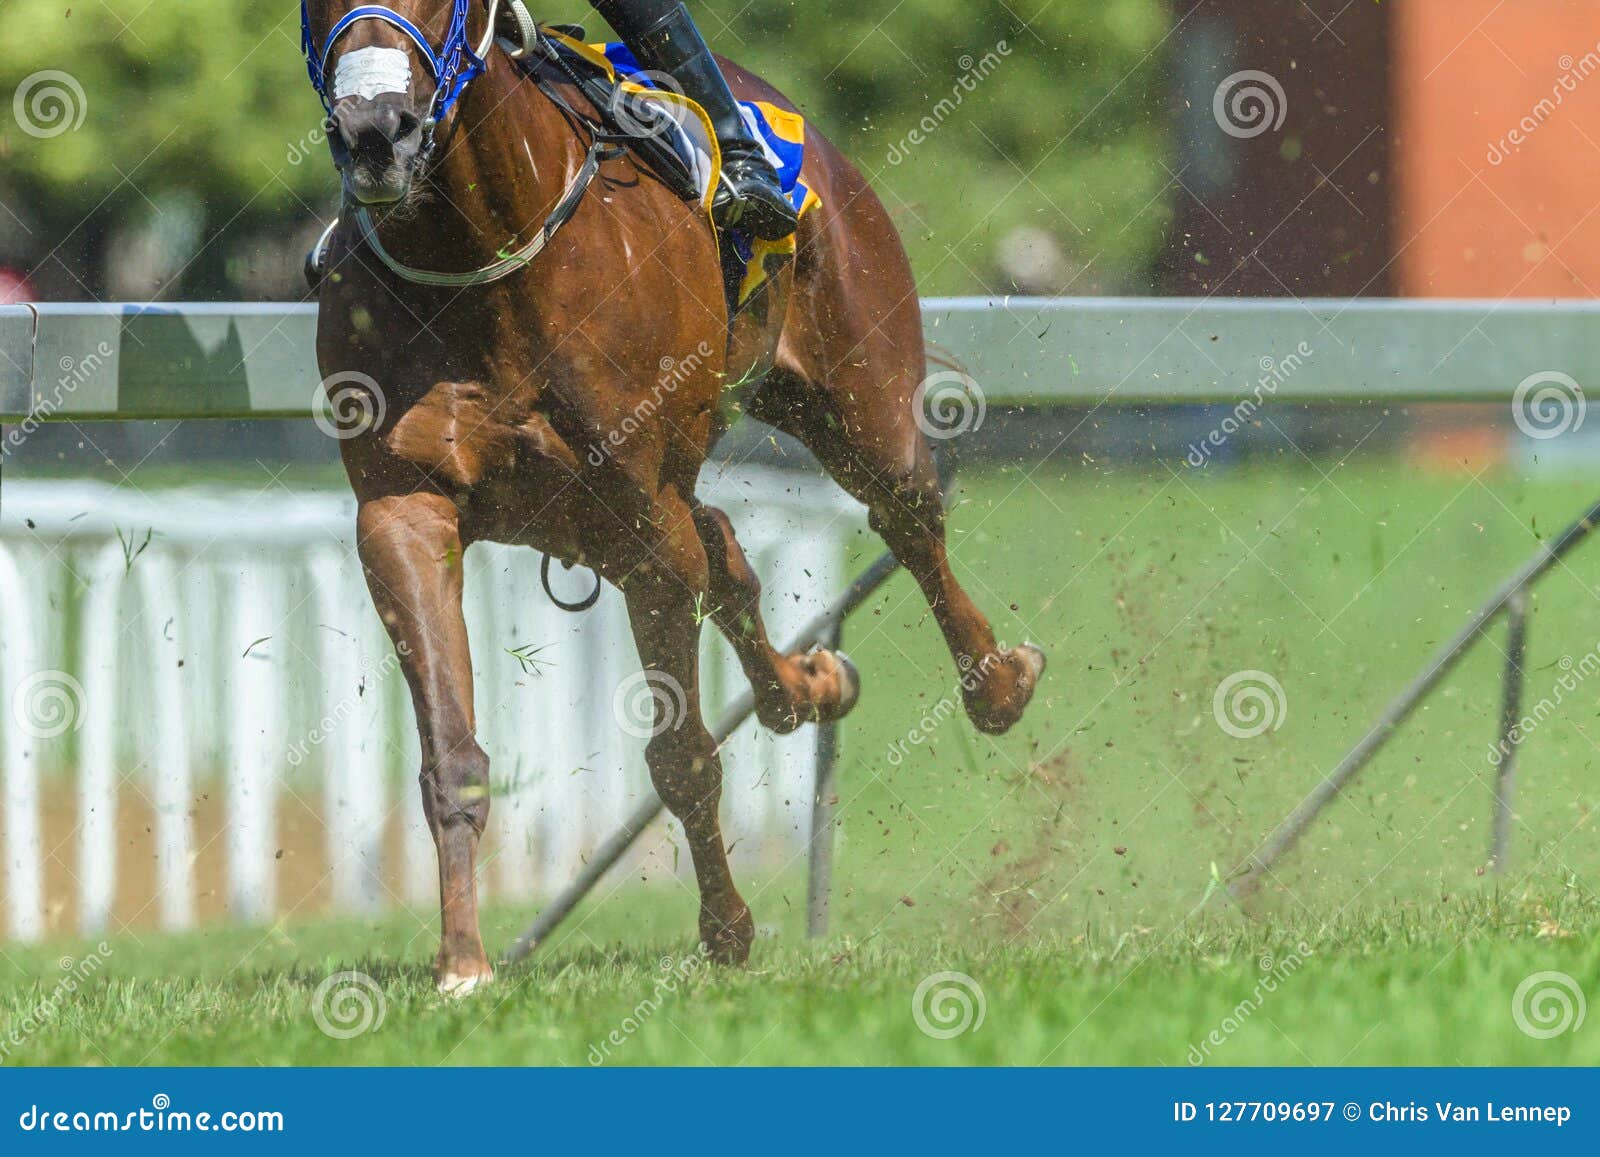 race horse running legs hoofs track close up